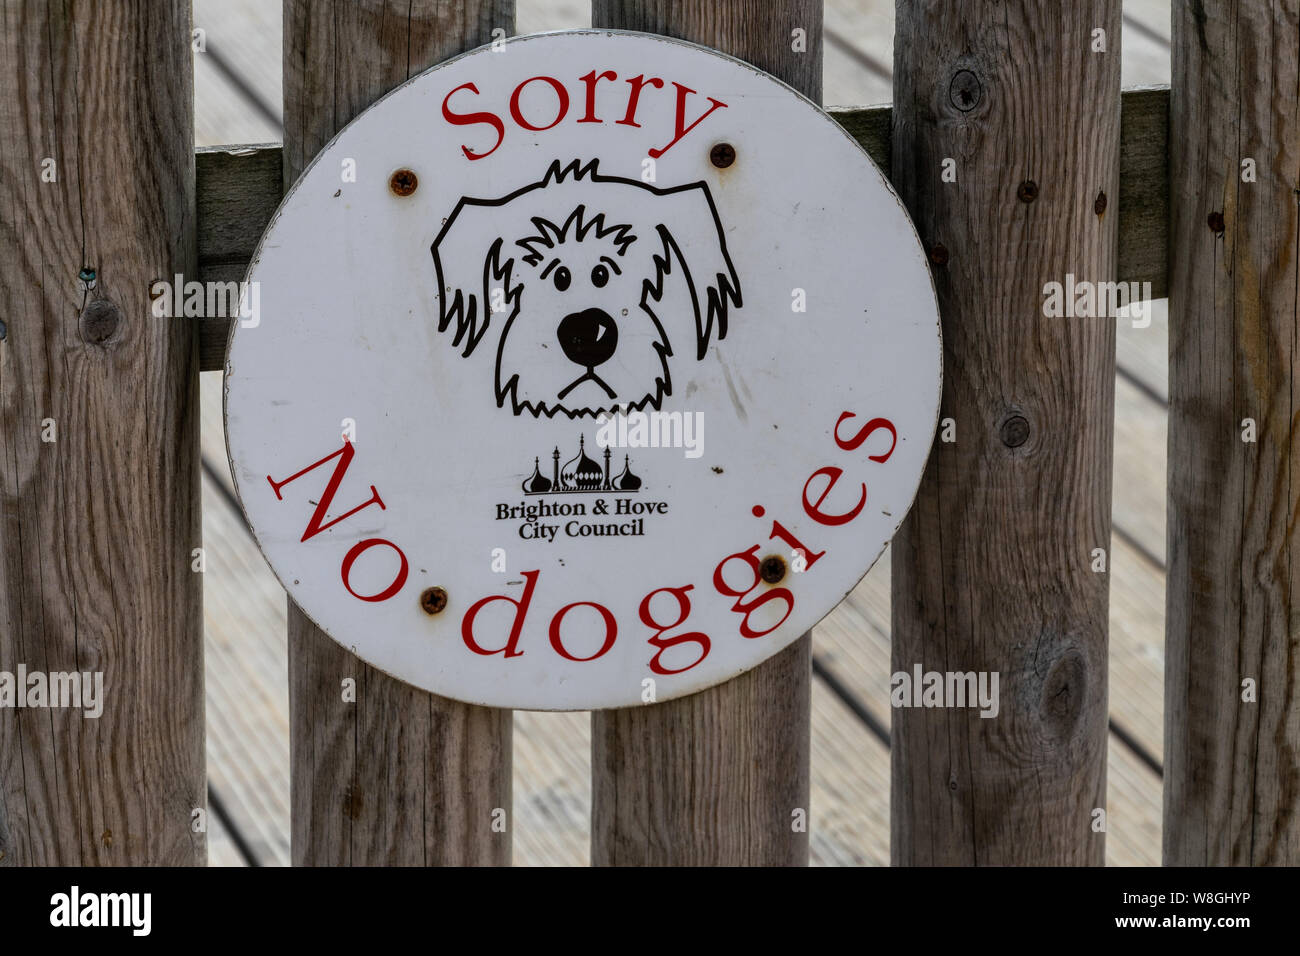 ign on Brighton beach 'Sorry No Doggies', Sussex, England Stock Photo